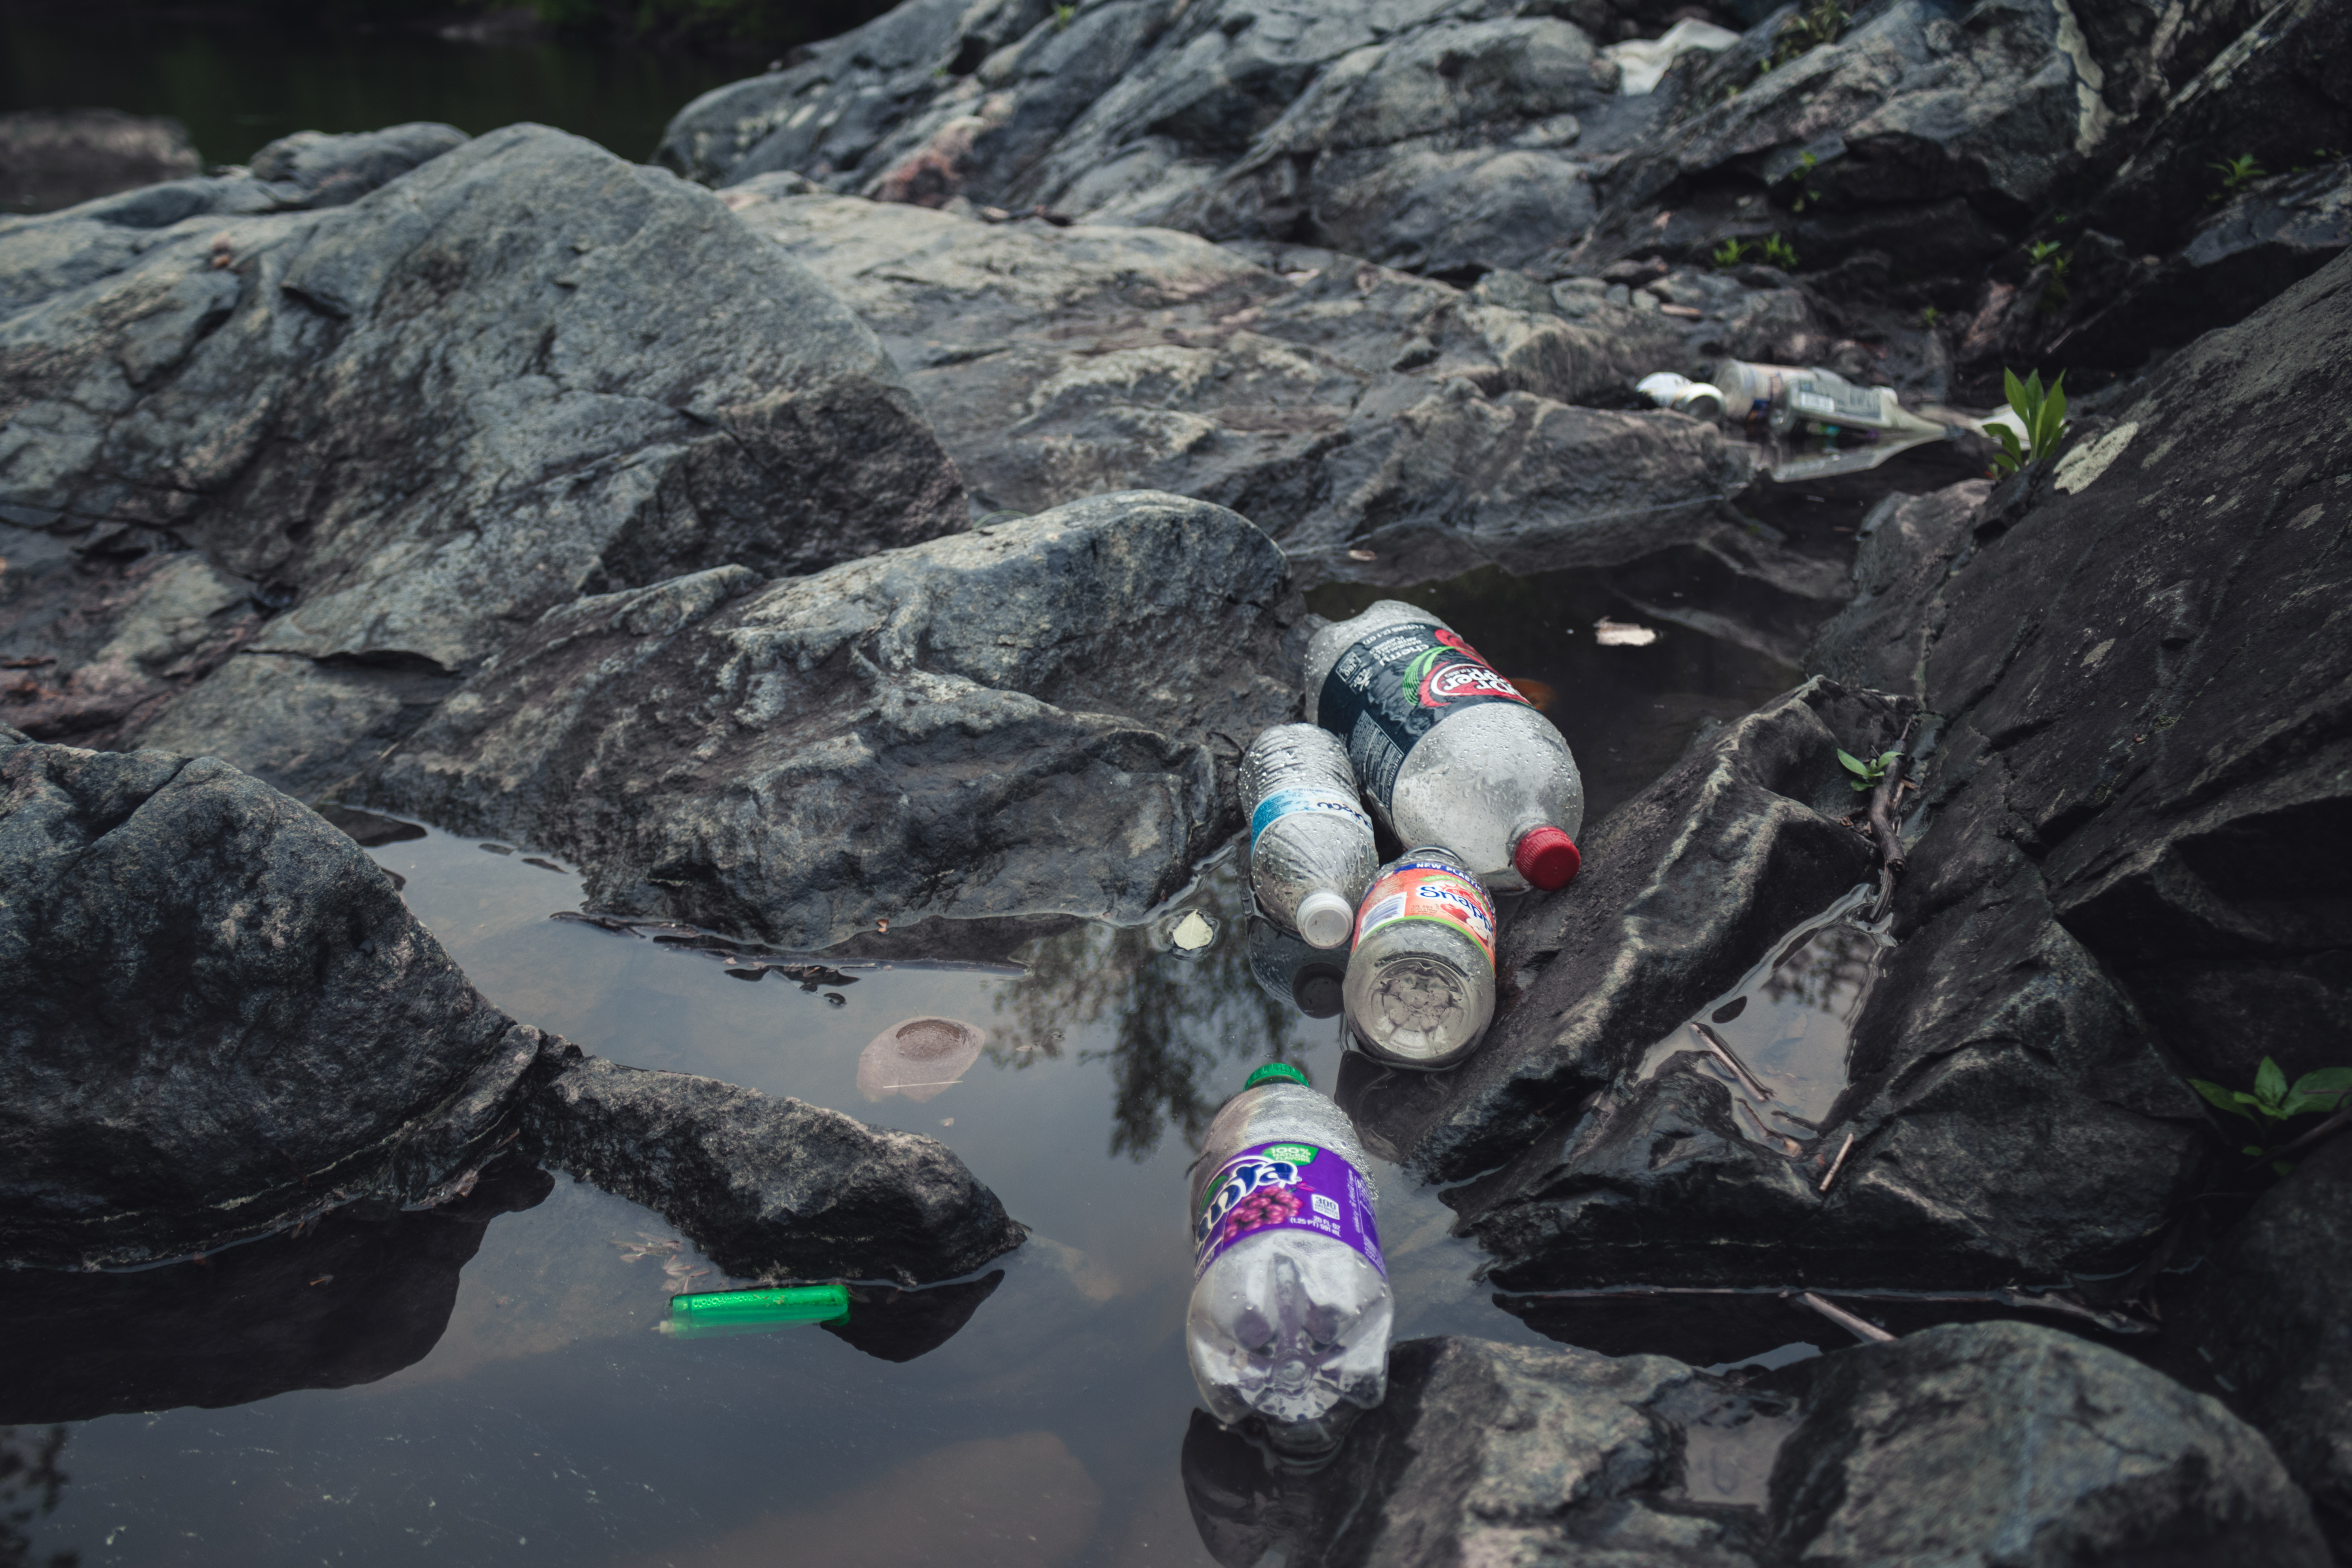 General 5941x3961 photography nature trash rocks bottles pollution